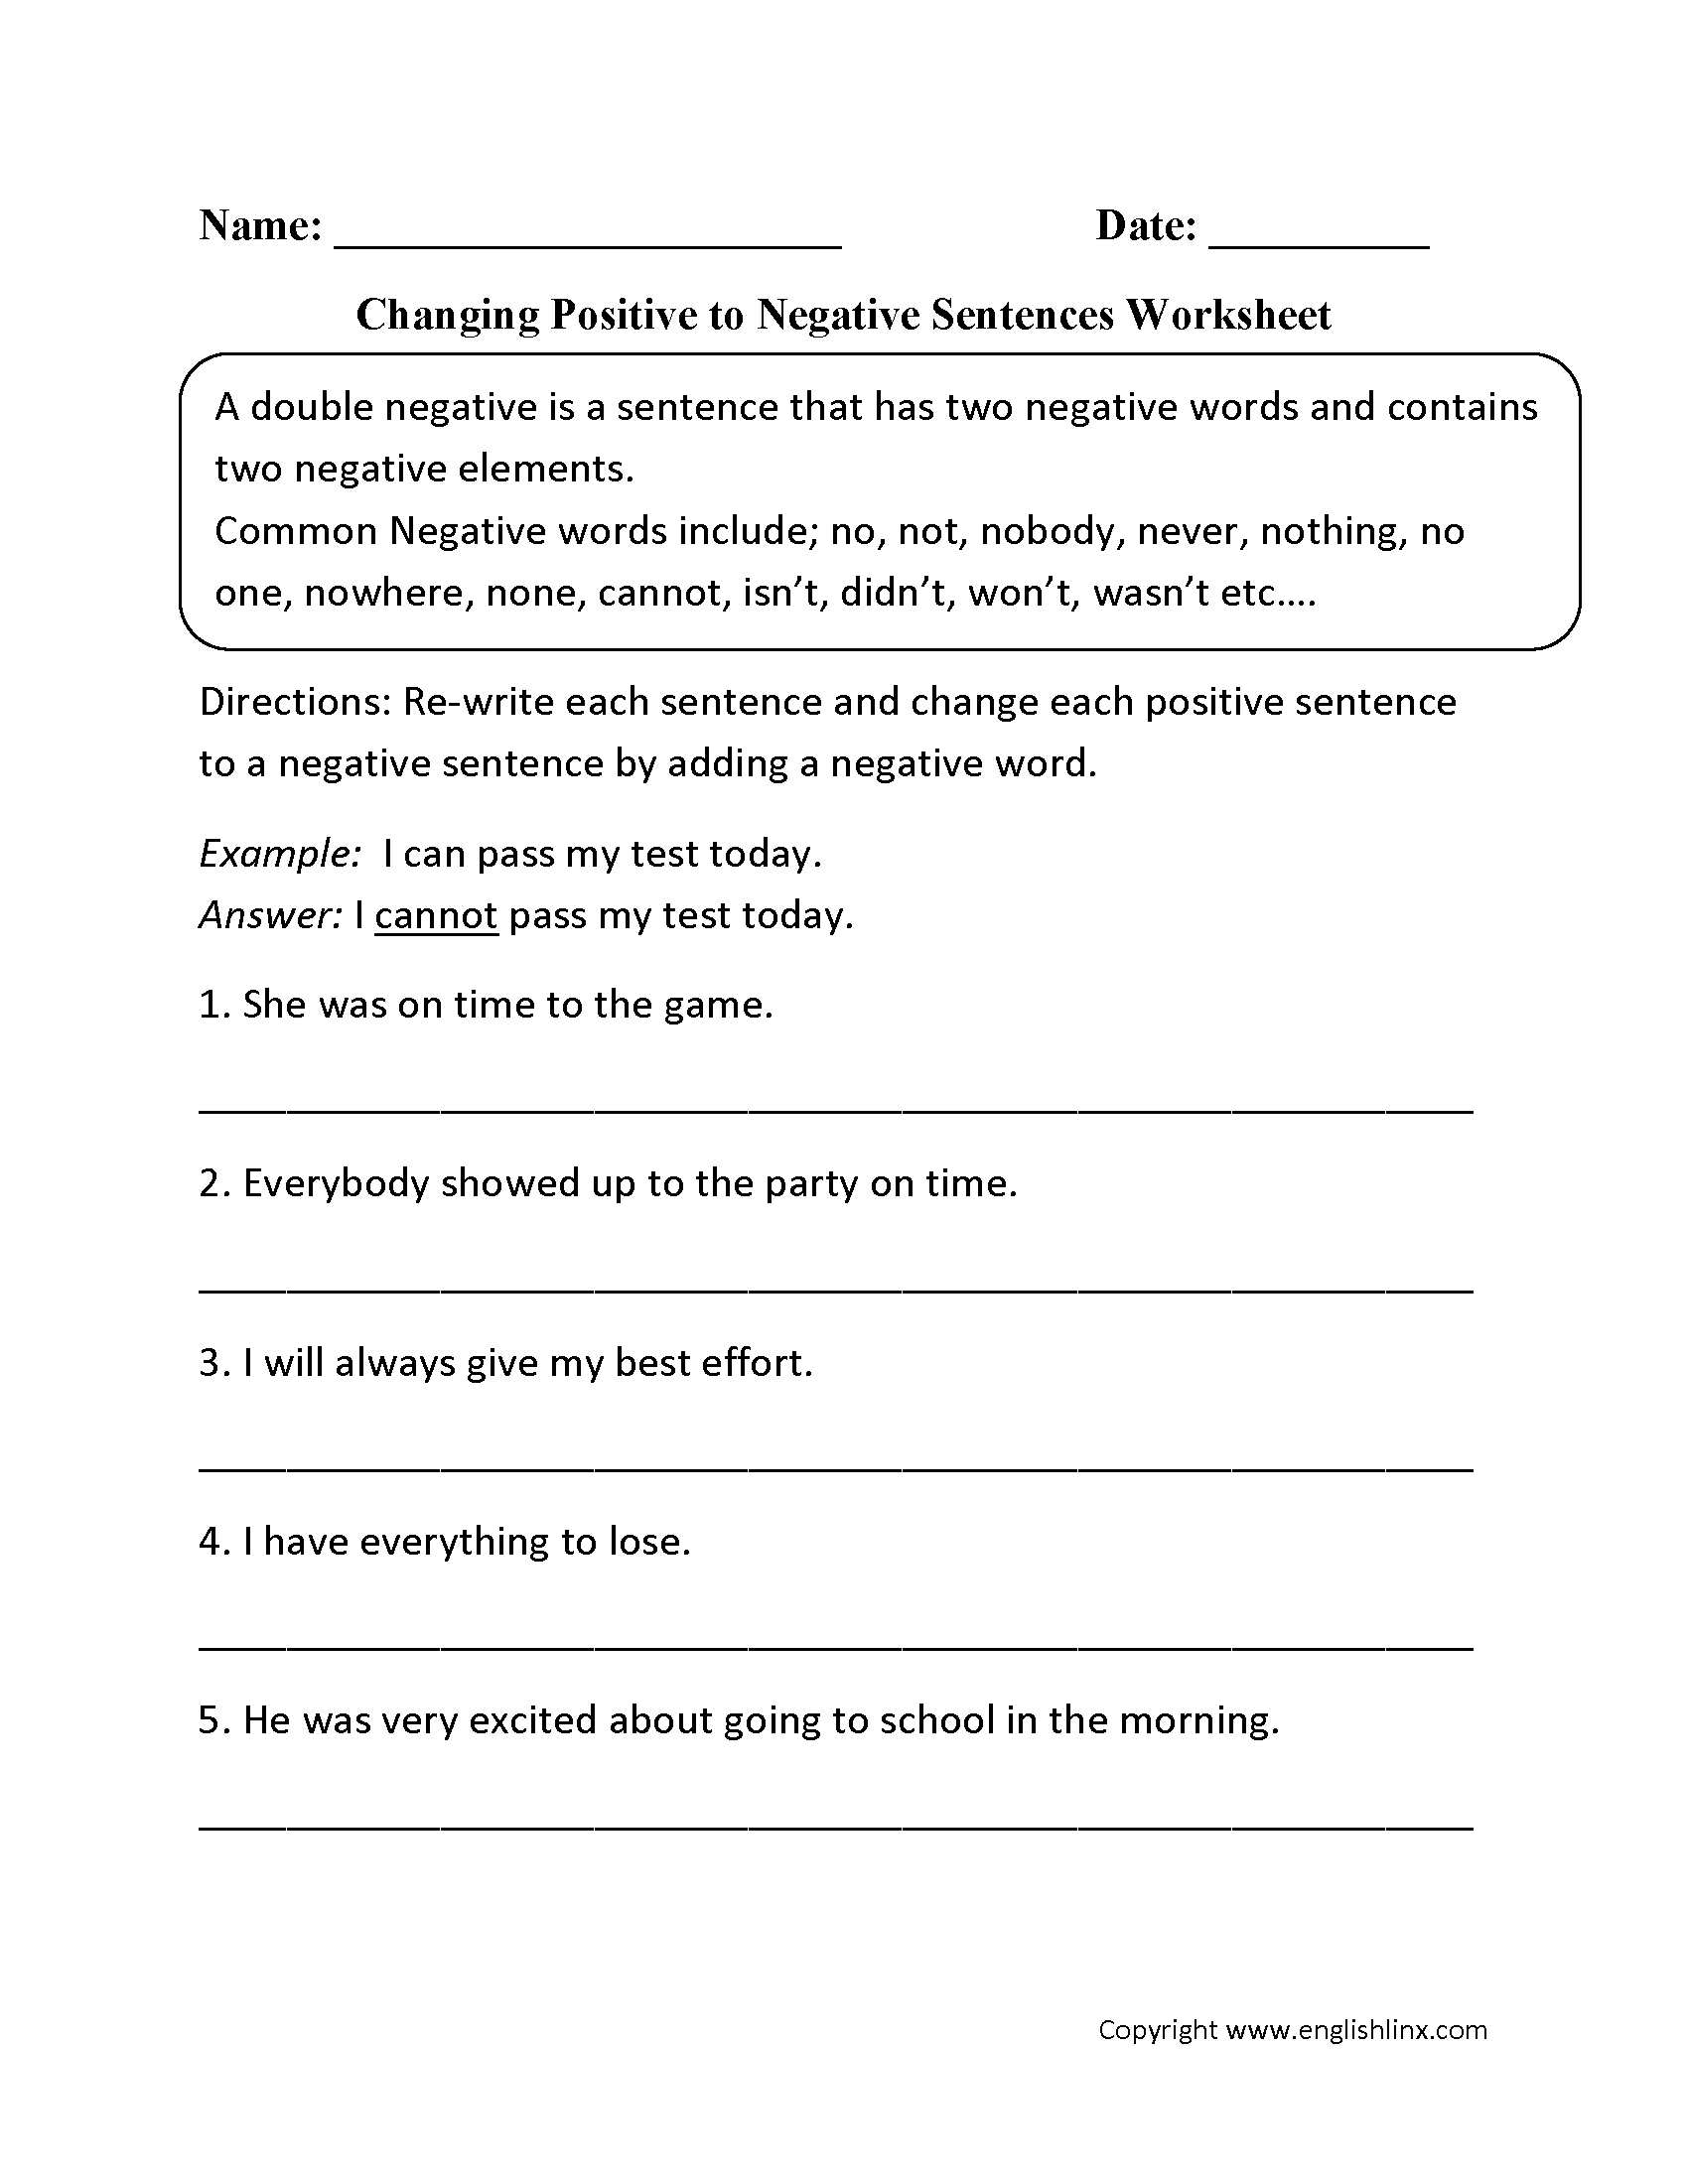 Changing Positive to Negative Sentences Worksheet